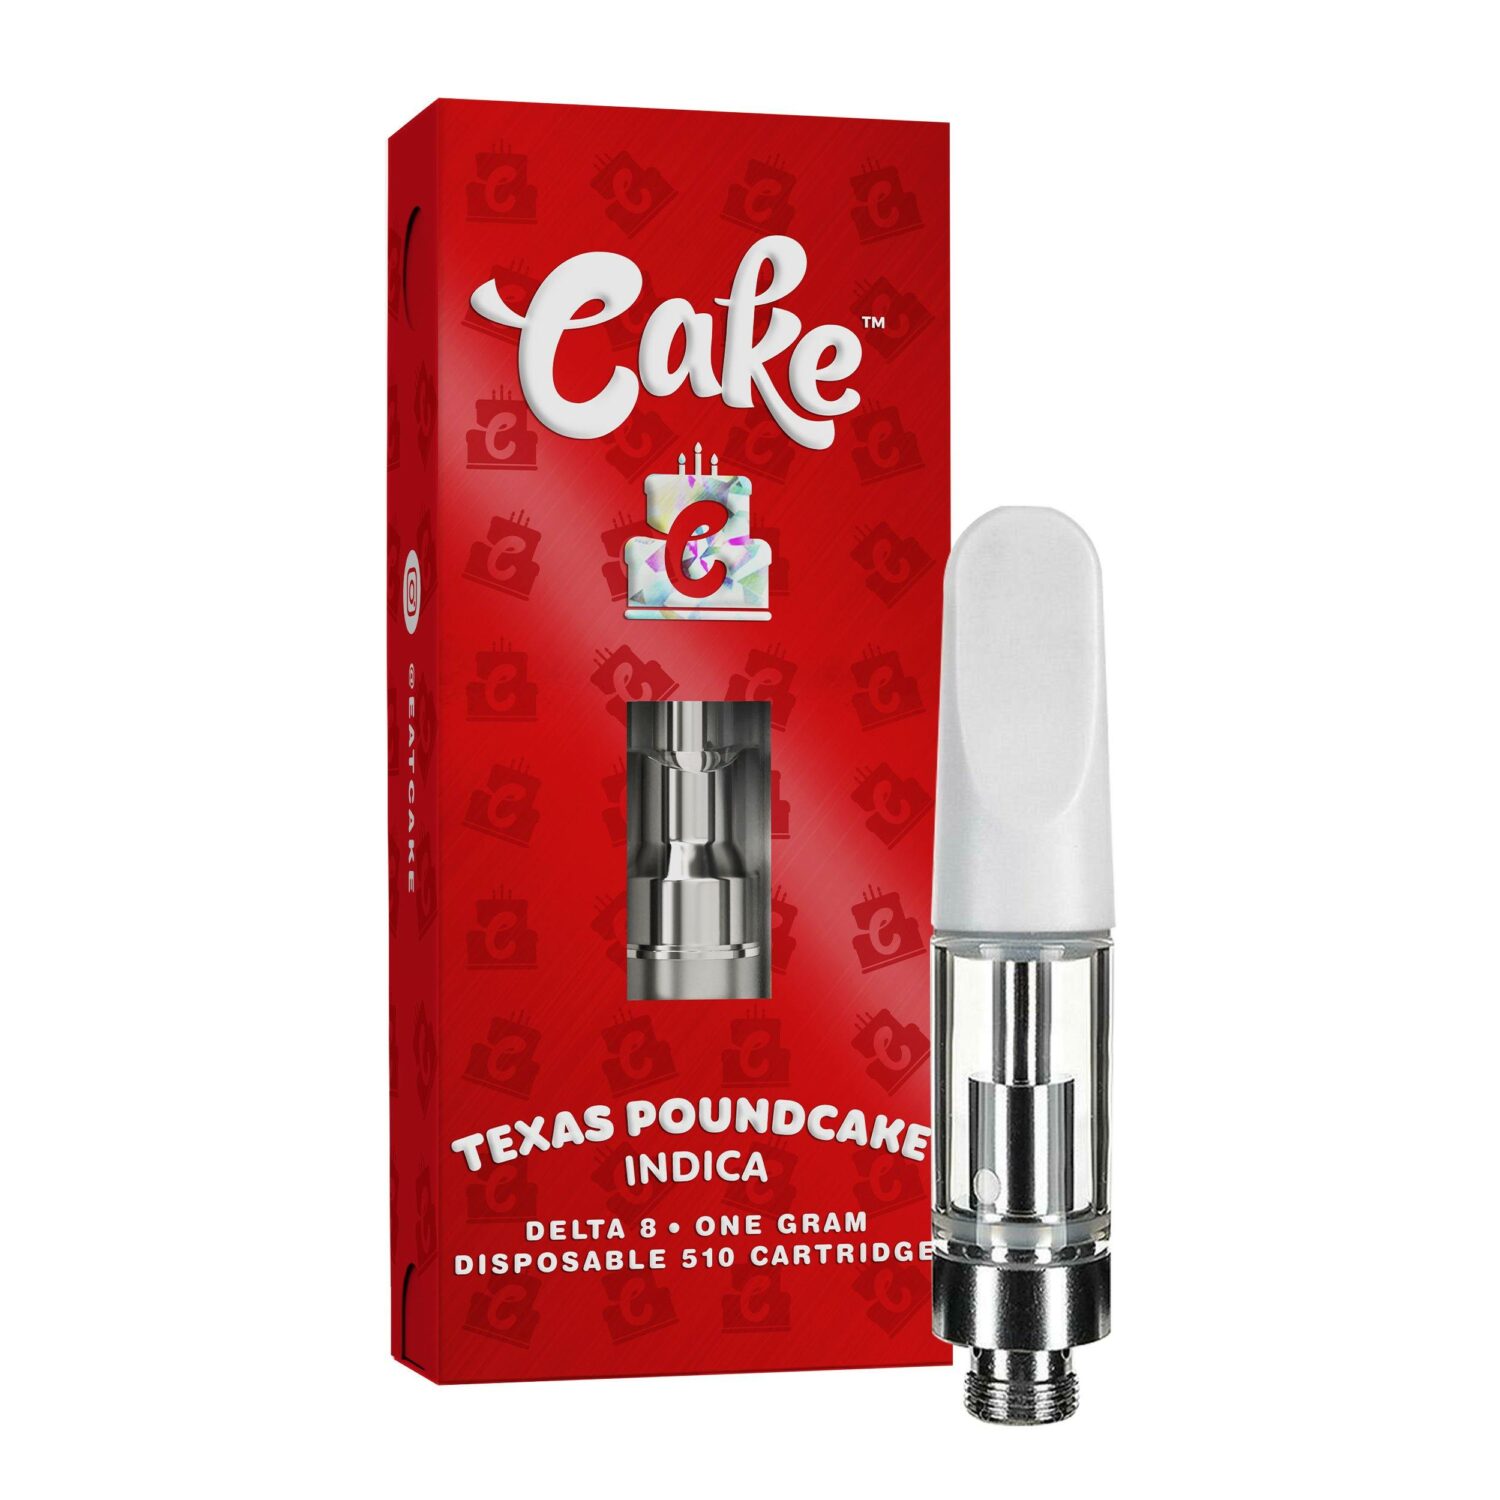 d8gas-cake-delta-8-cartridges-texas-poundcake-scaled-1.jpg